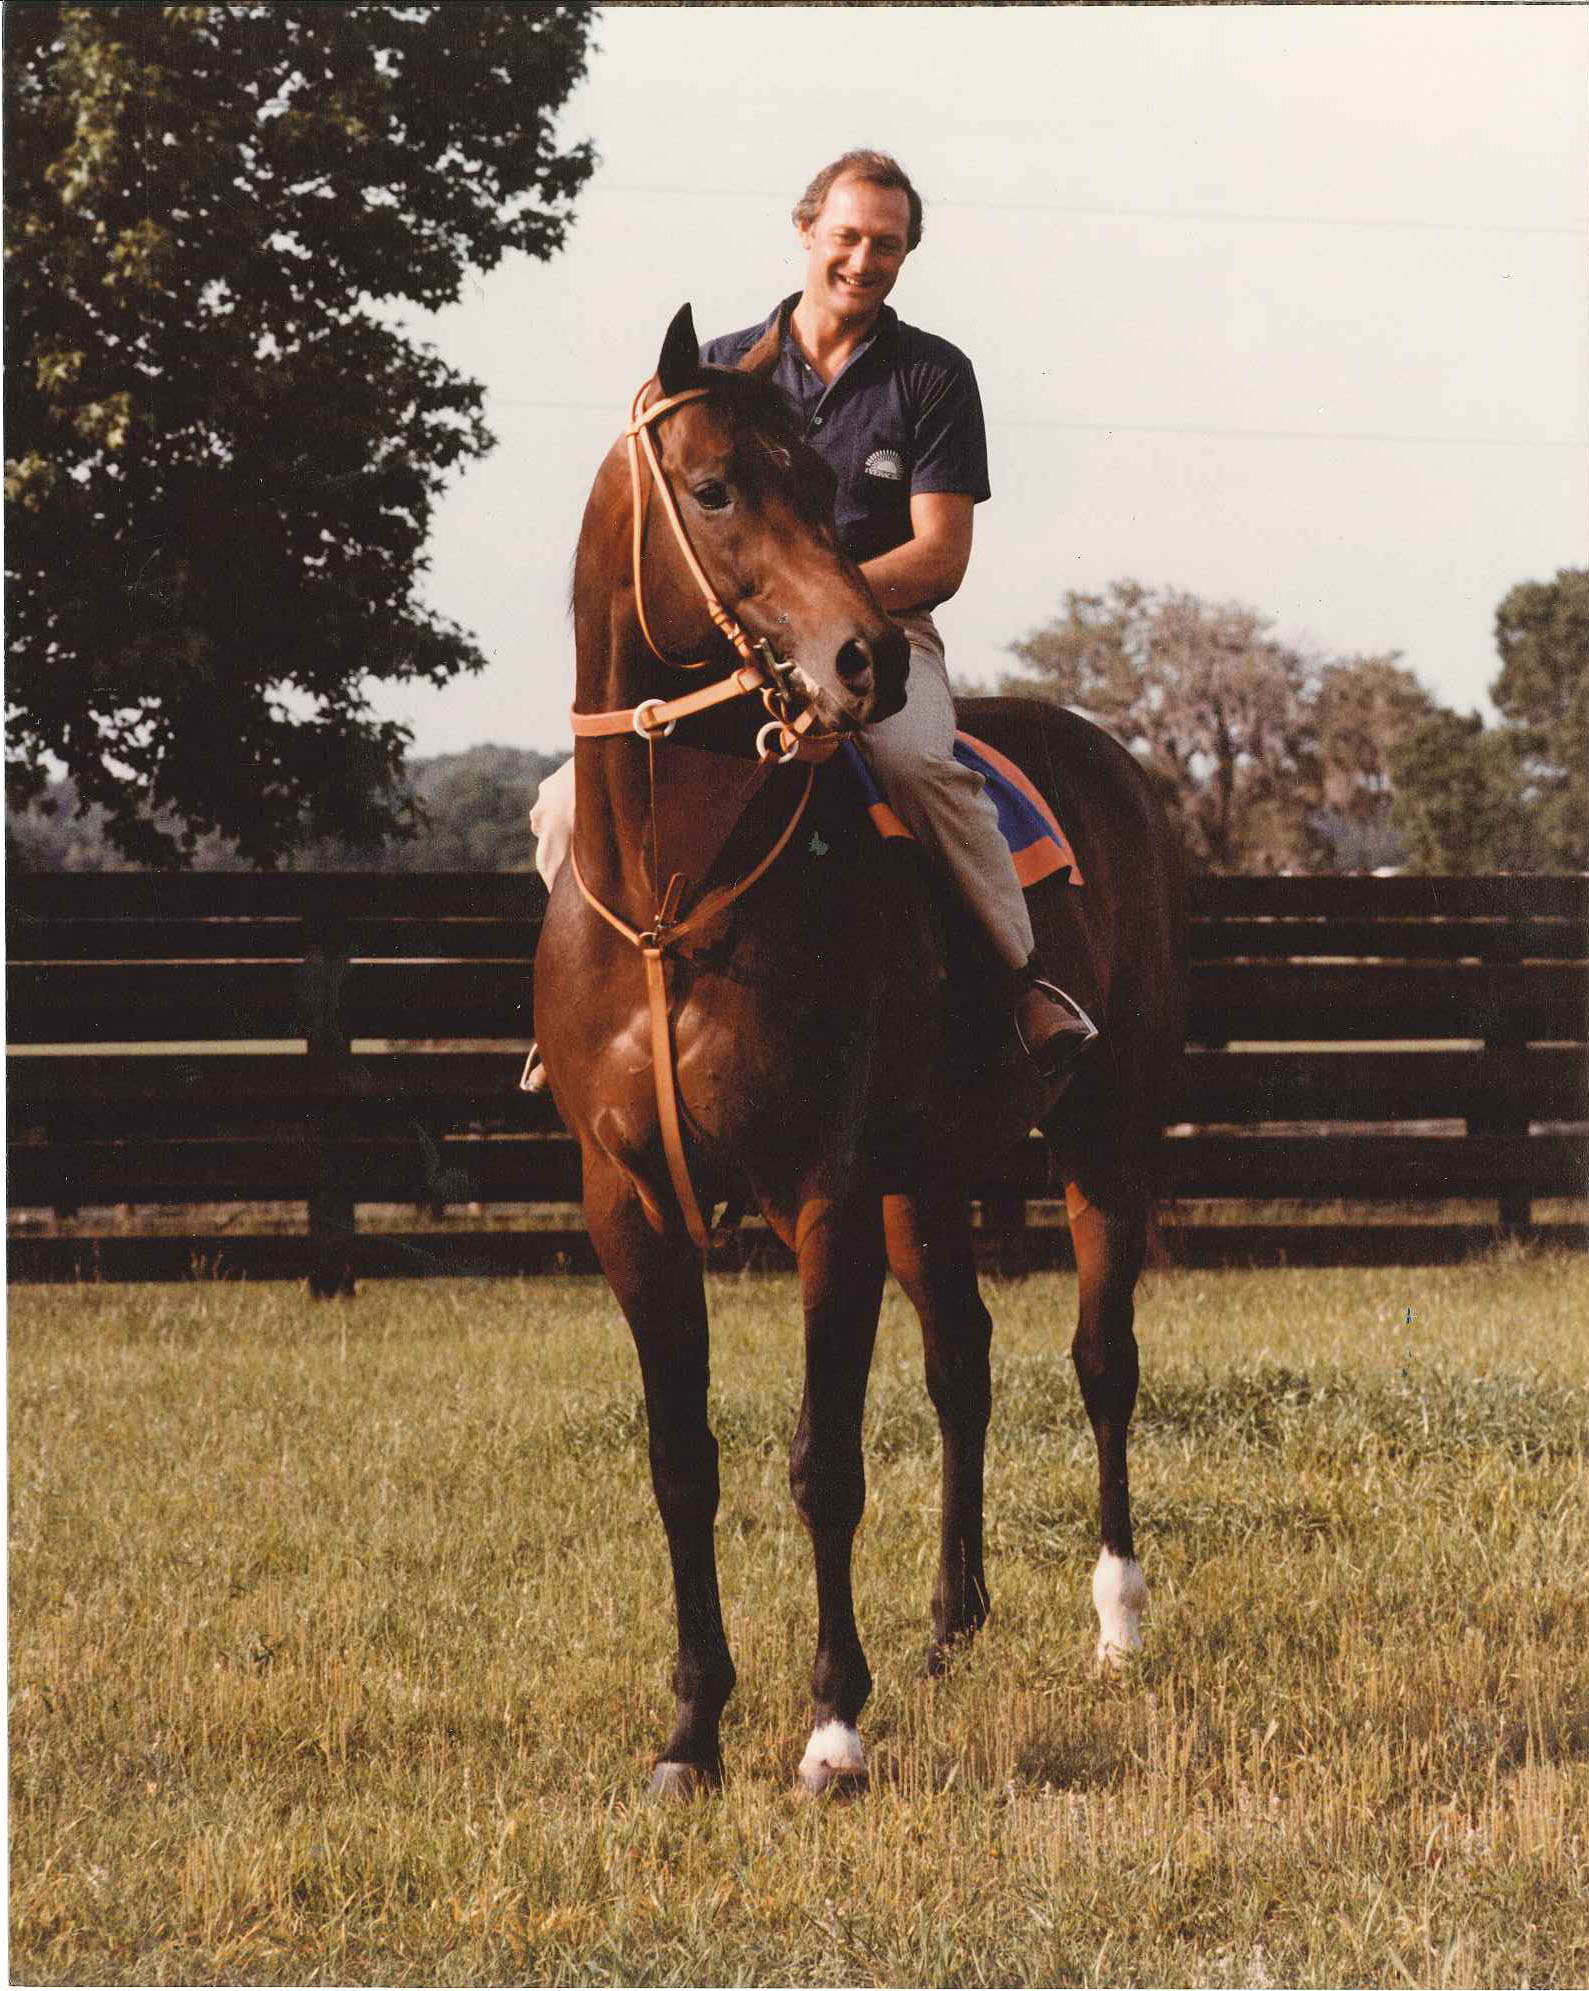 Roger Attfield on horseback (Woodbine Photo)